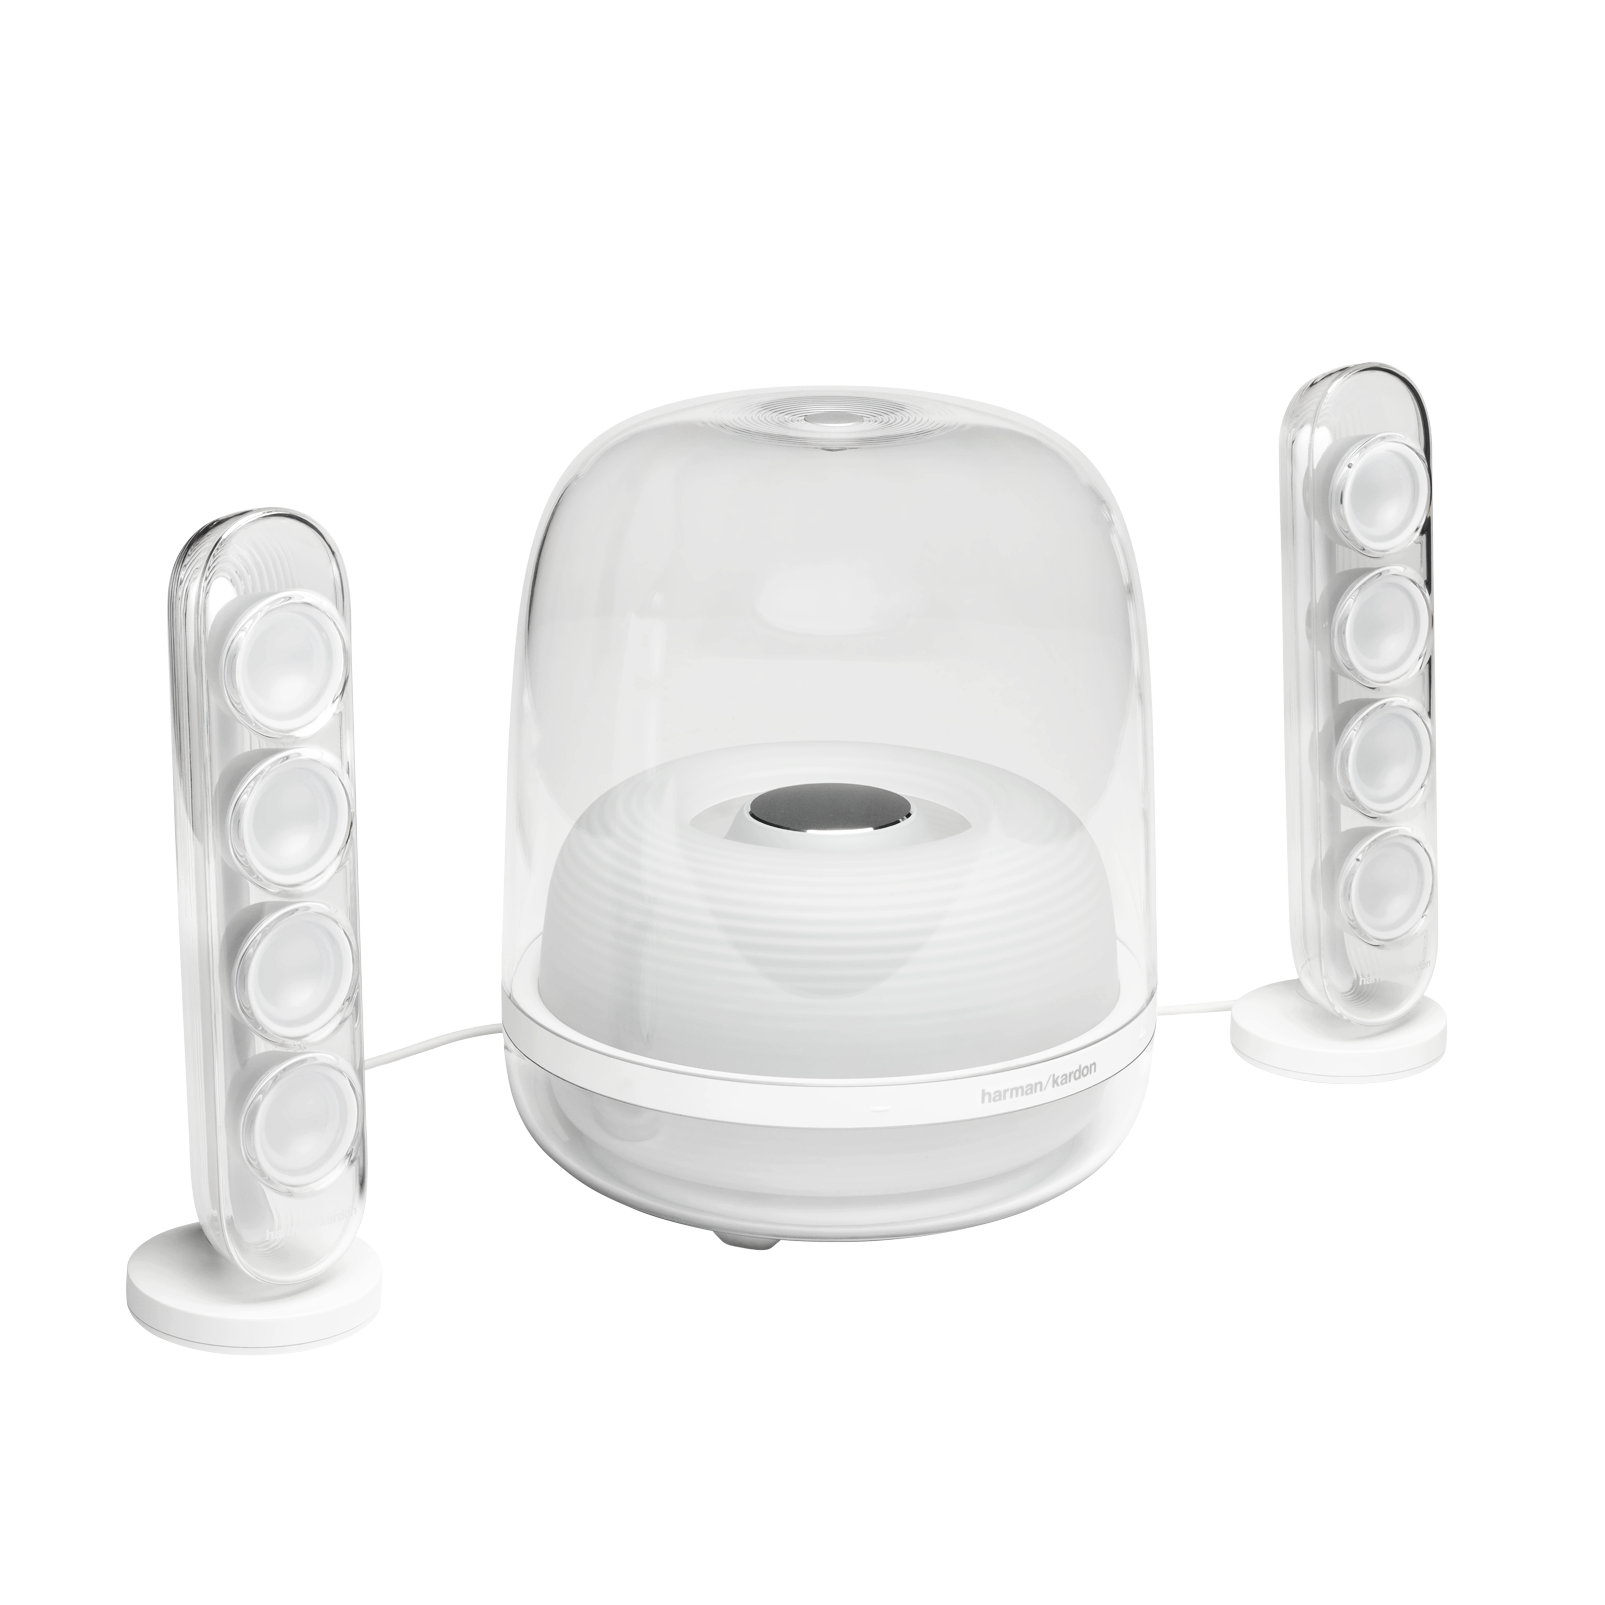 Harman Kardon SoundSticks 4 | Bluetooth Speaker System